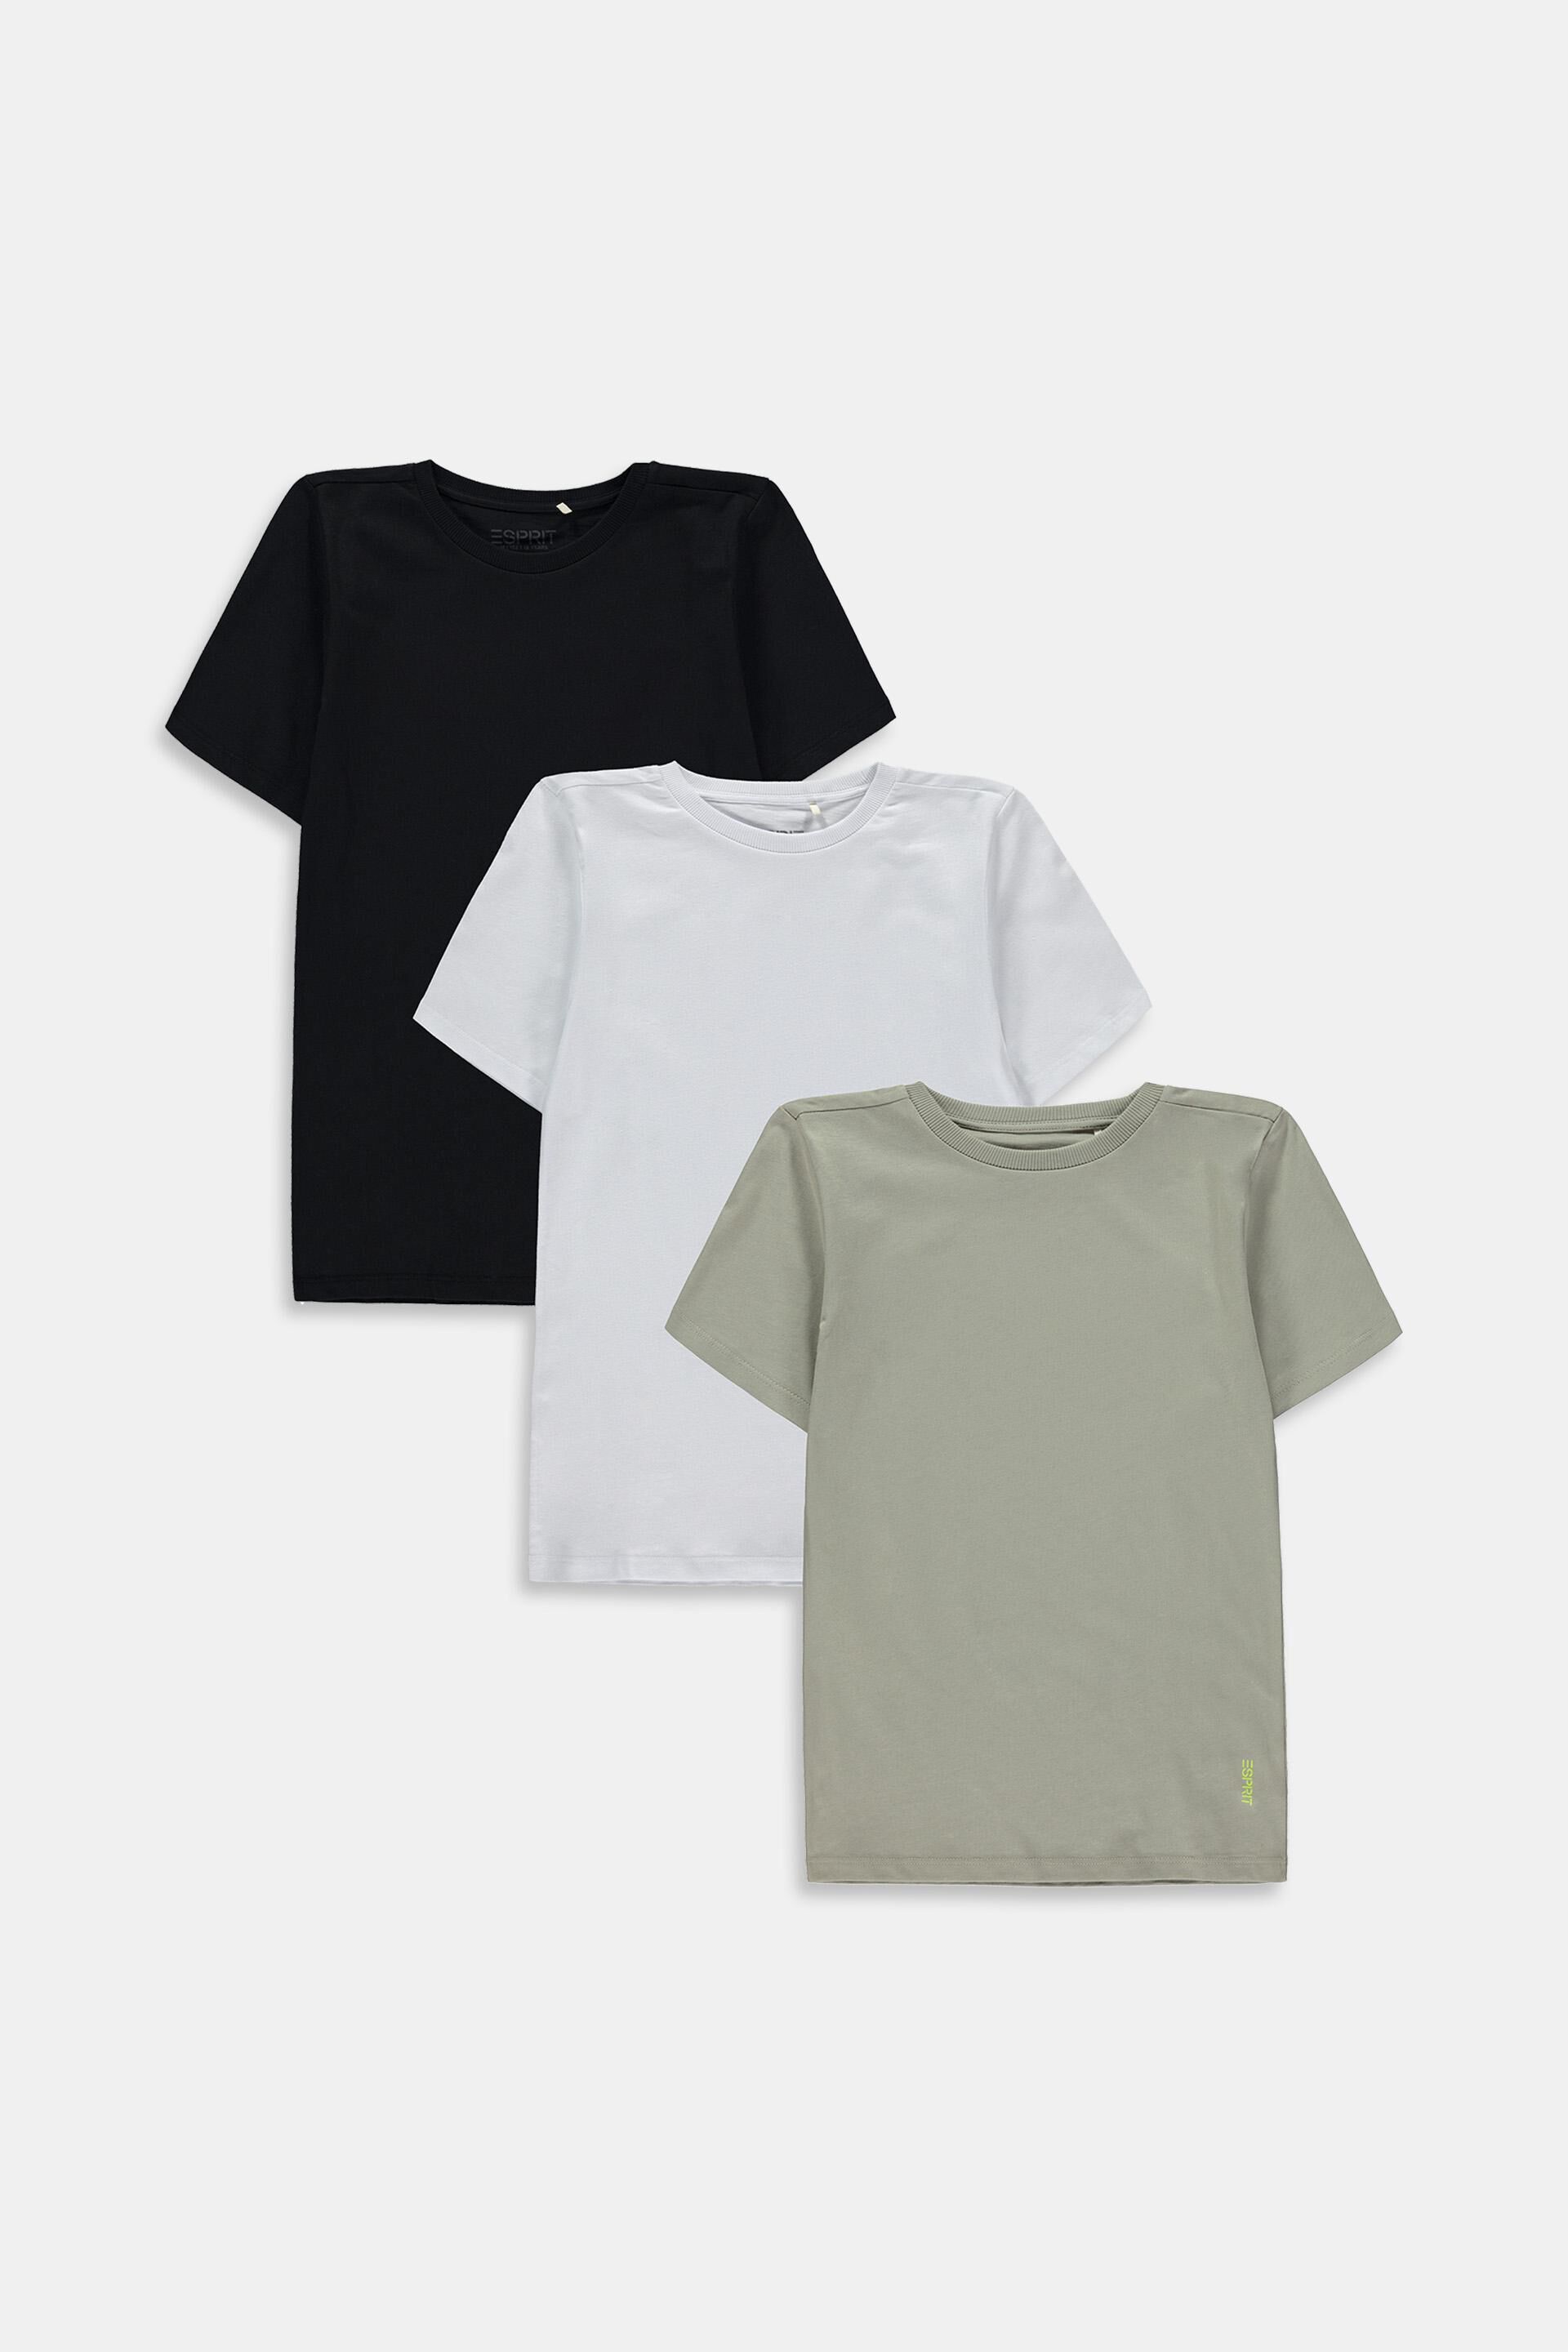 Esprit 3-pack t-shirts of pure cotton